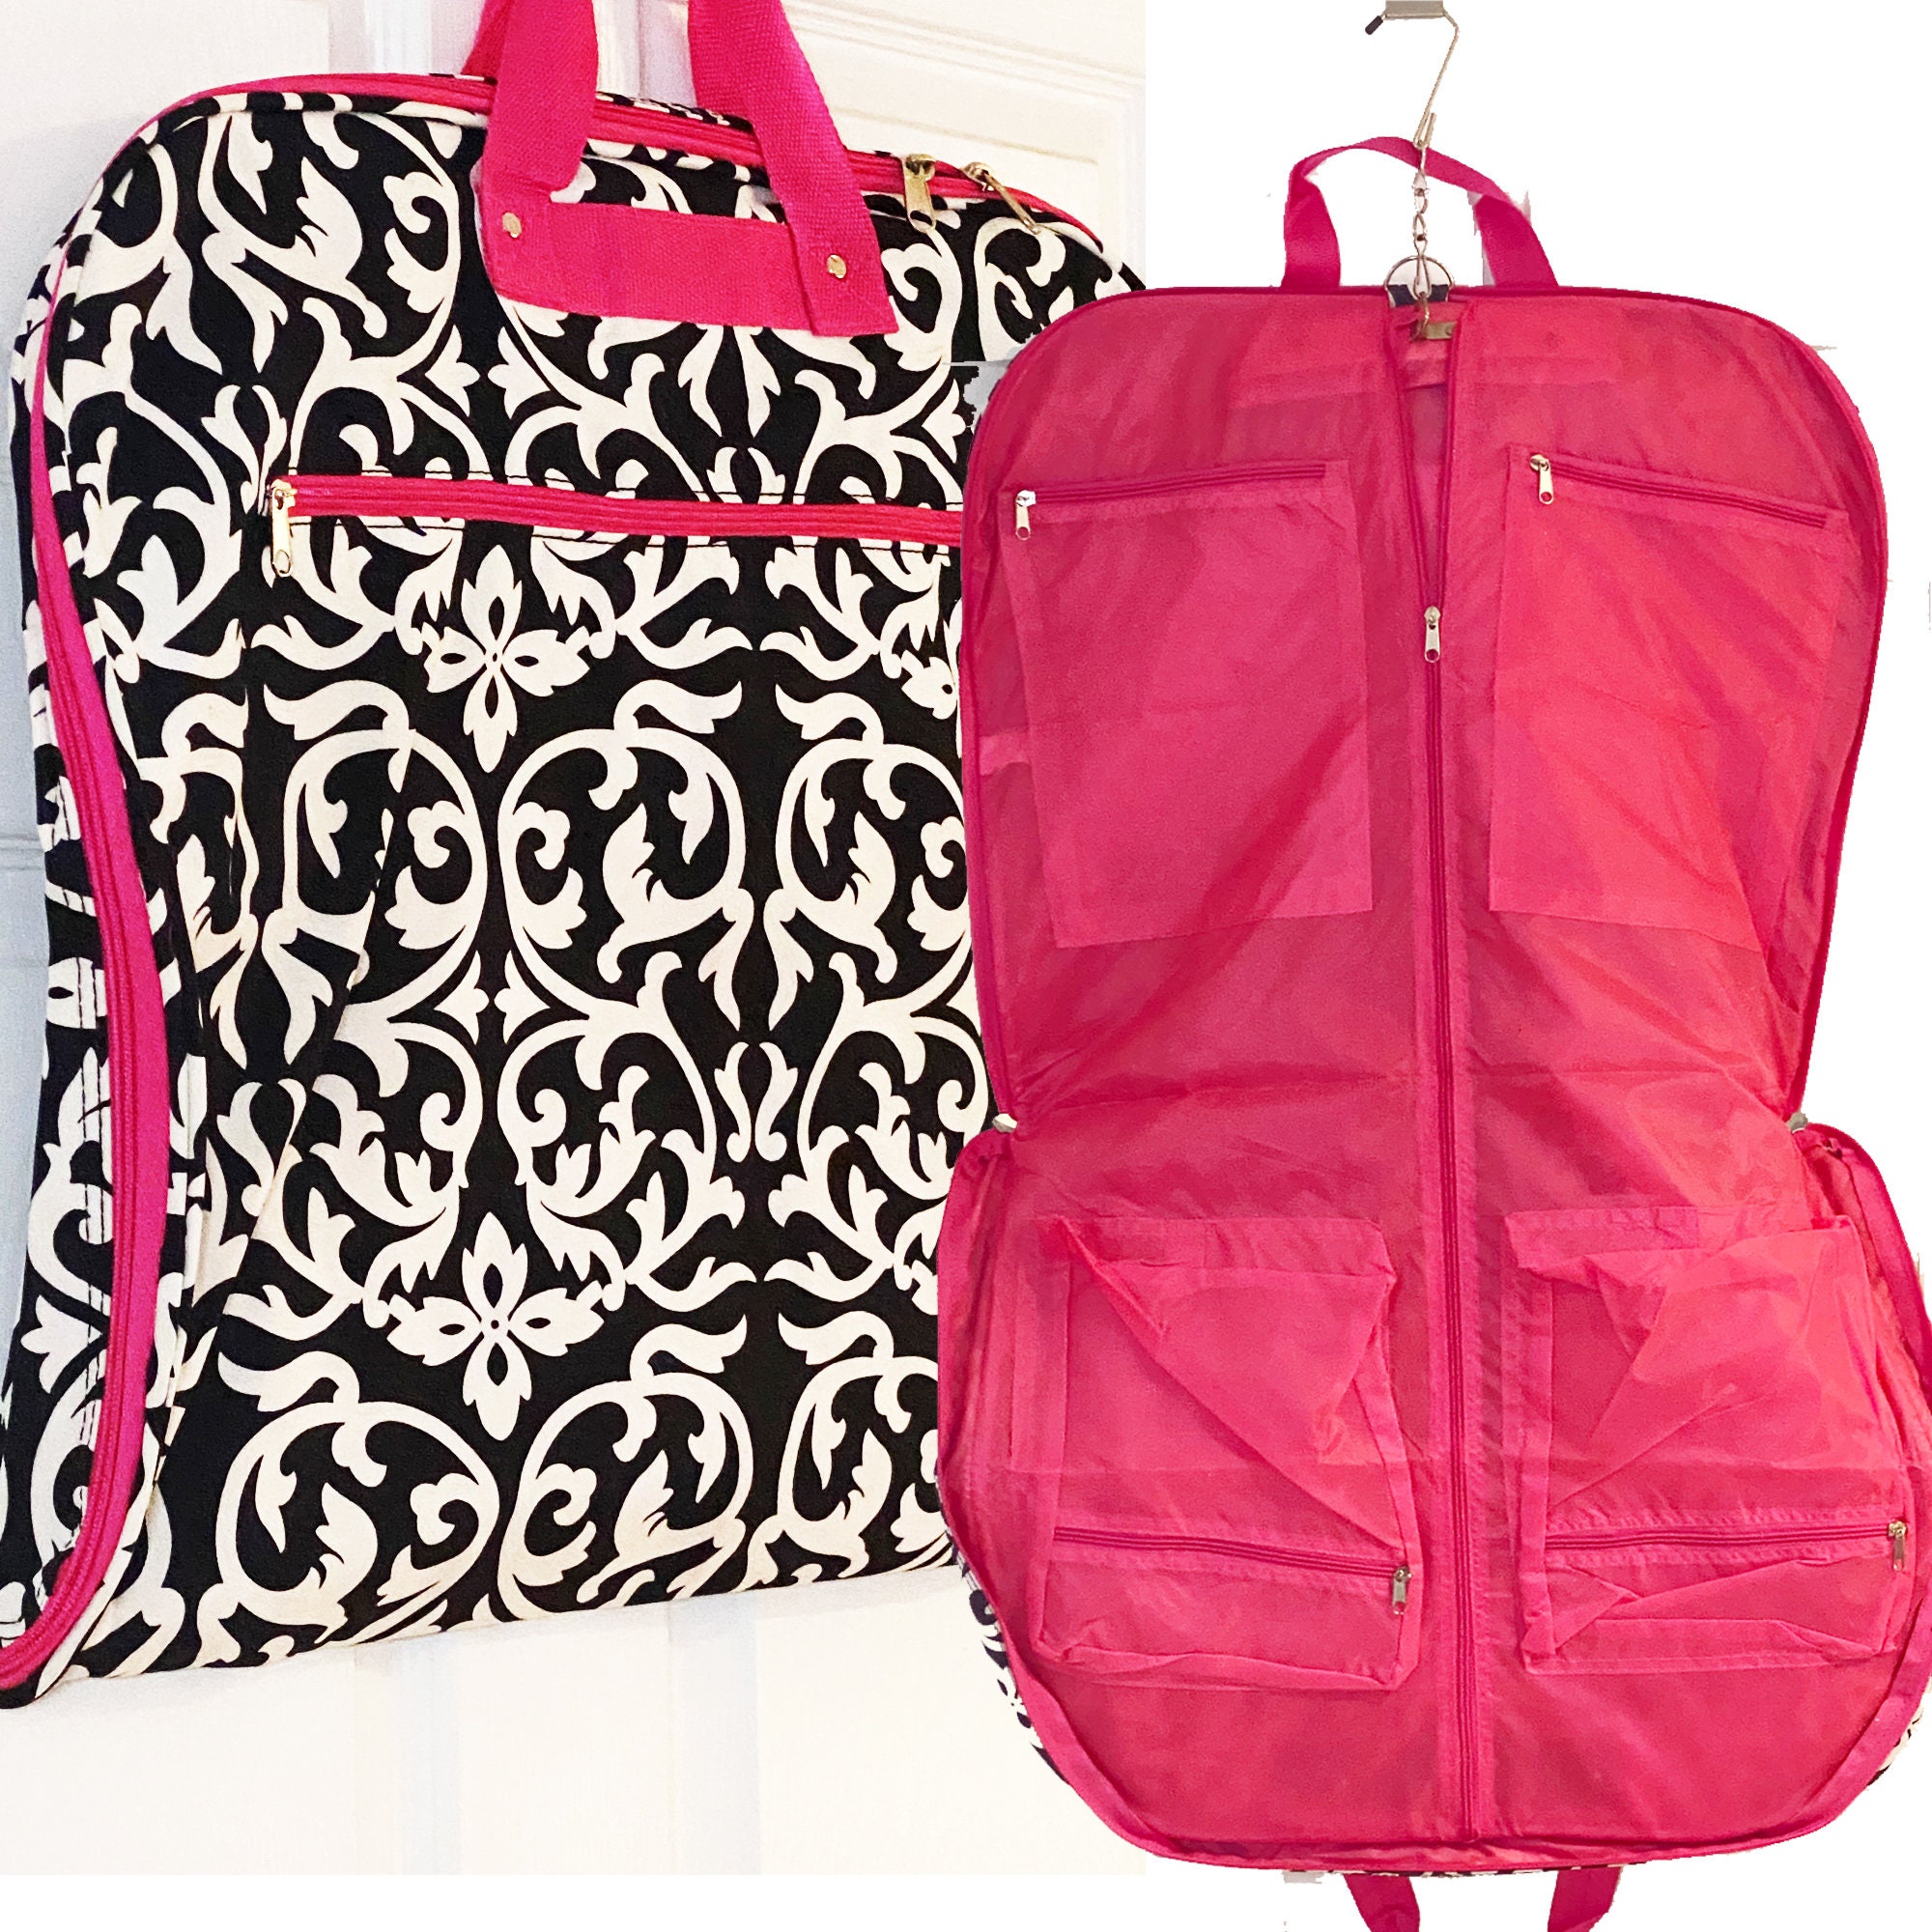 Canvas Garment Bag W/ Monogram/black&white Damask With Pink 